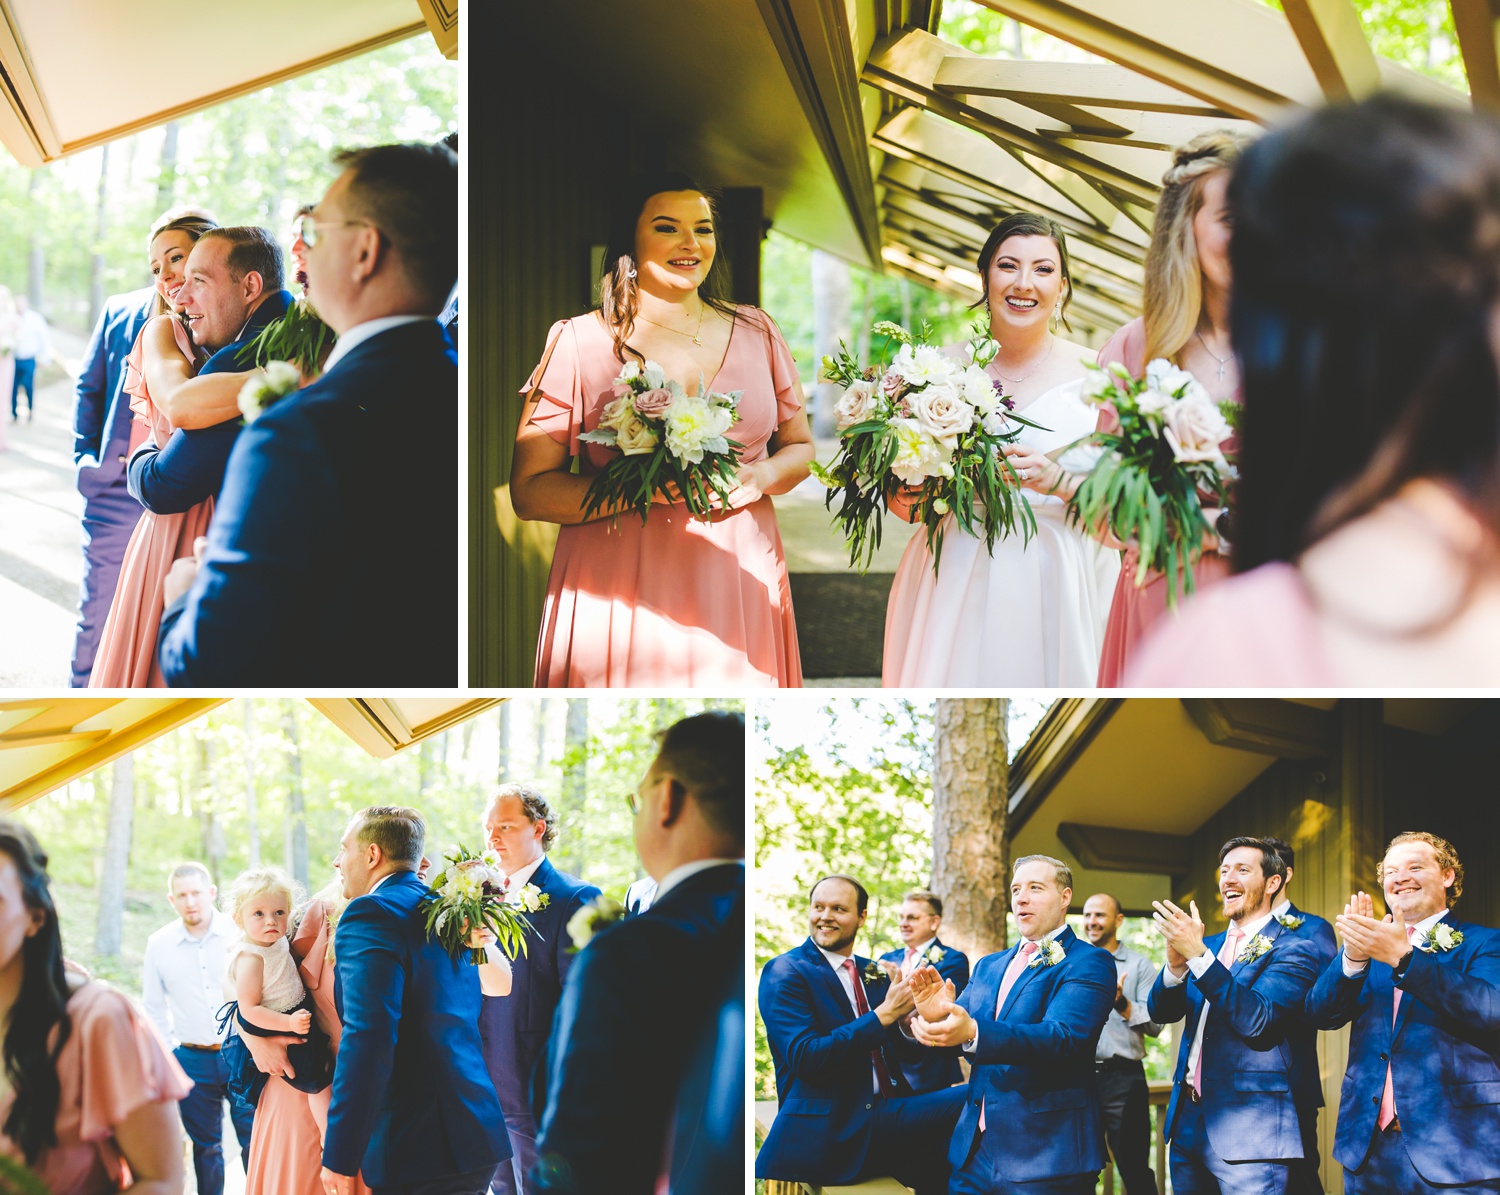 Colorful Wedding Photographs Taken at Cooper Chapel in Bella Vista